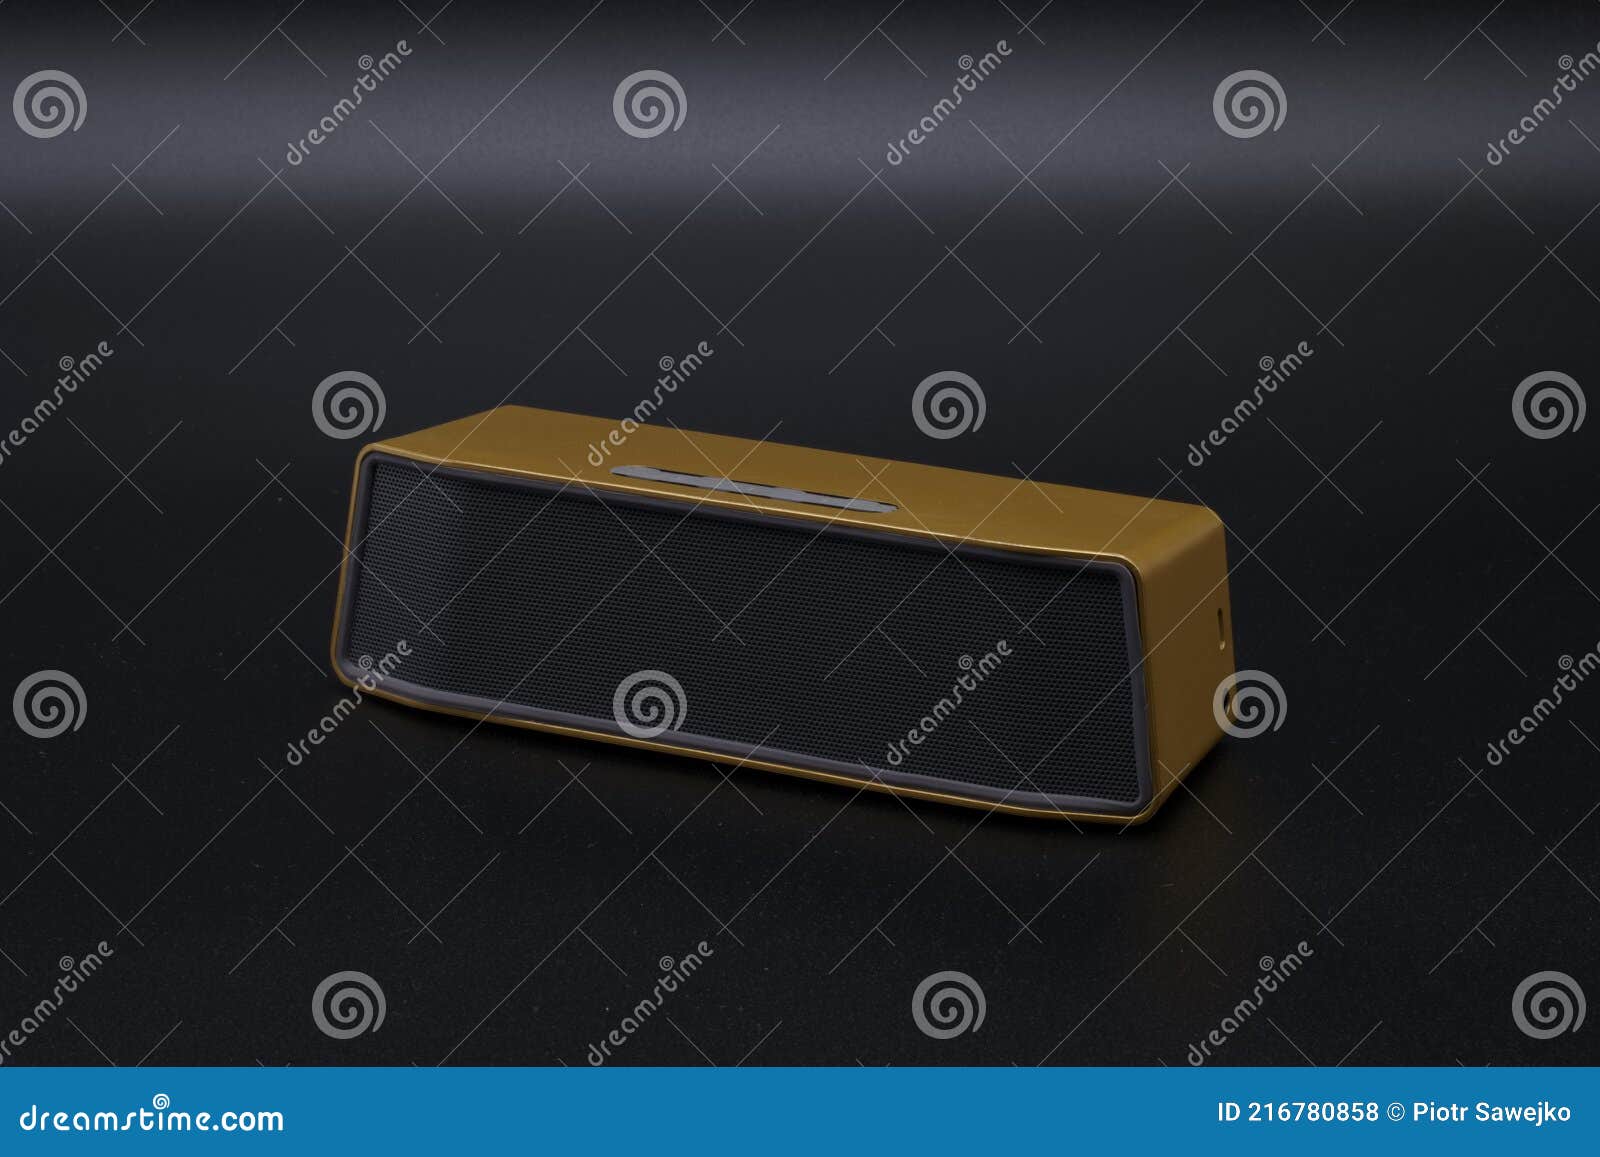 speaker electronica metal plastic gold gray